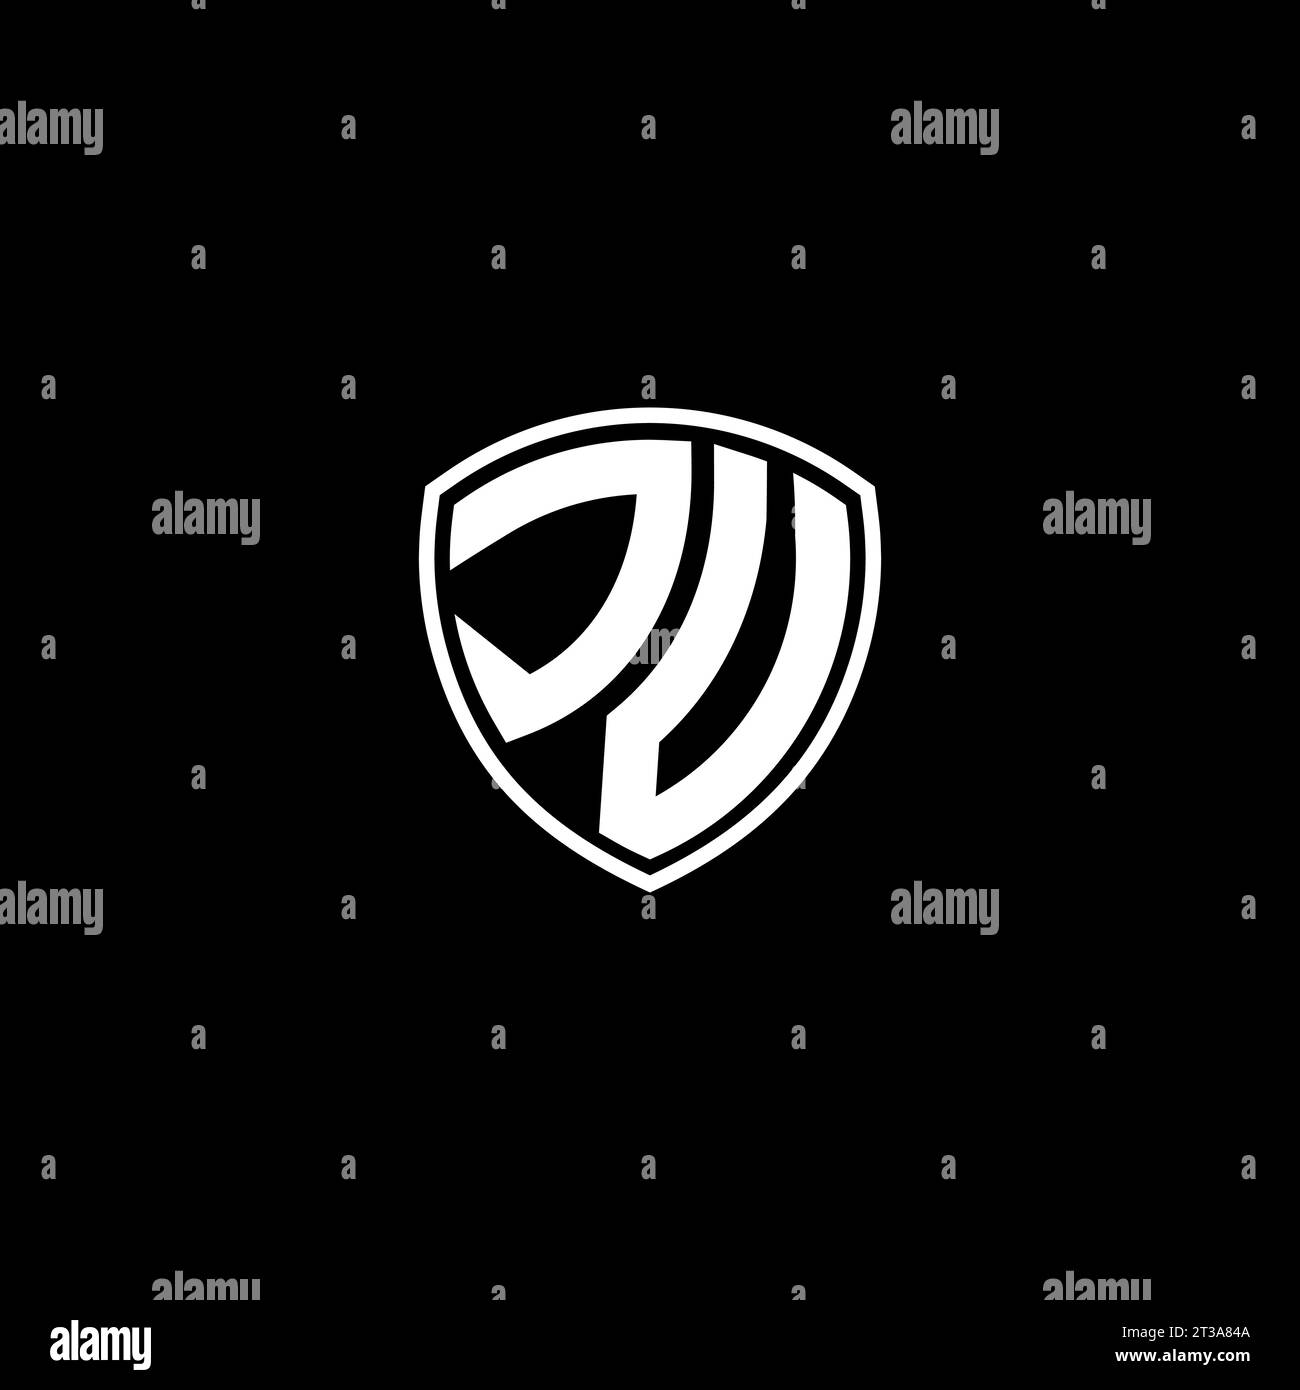 JV logo monogram emblem style with shield shape design template ideas Stock Vector